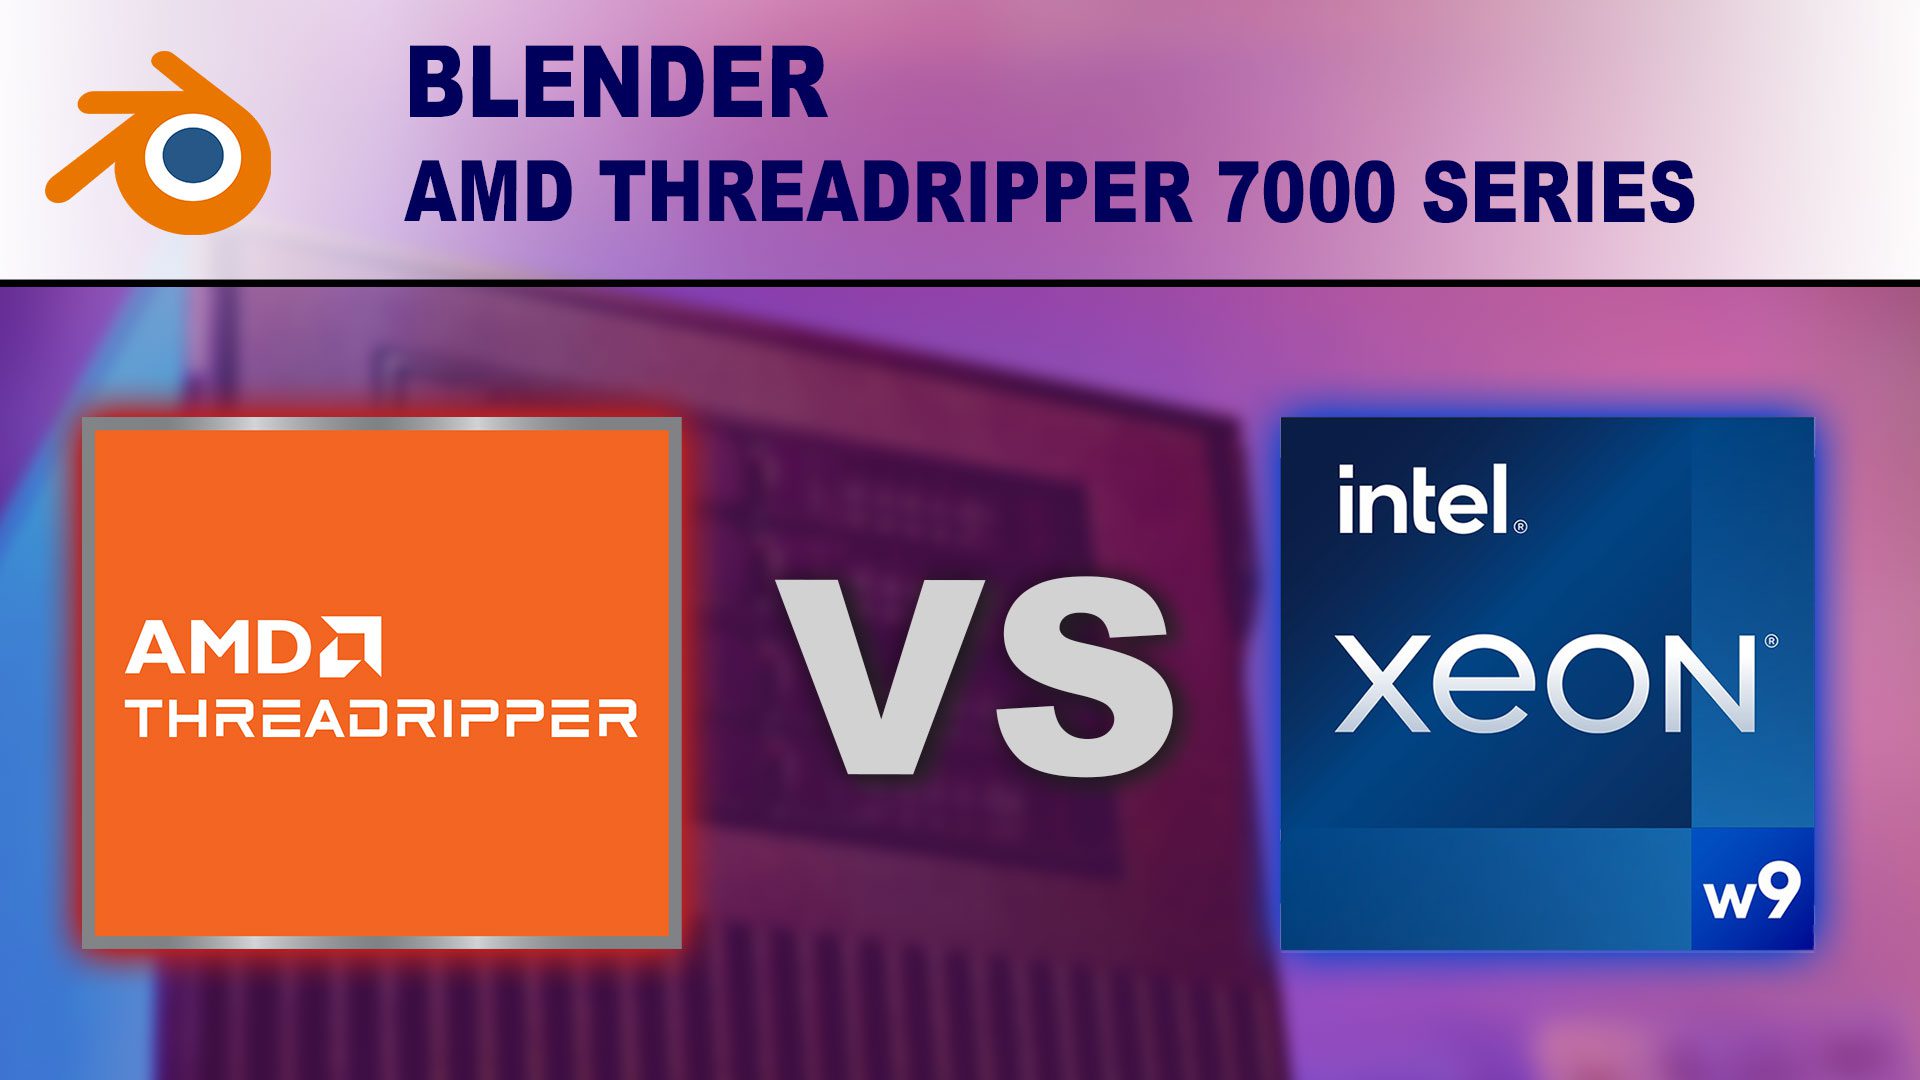 Decorative Image: Blender - AMD Threadripper vs Intel Xeon